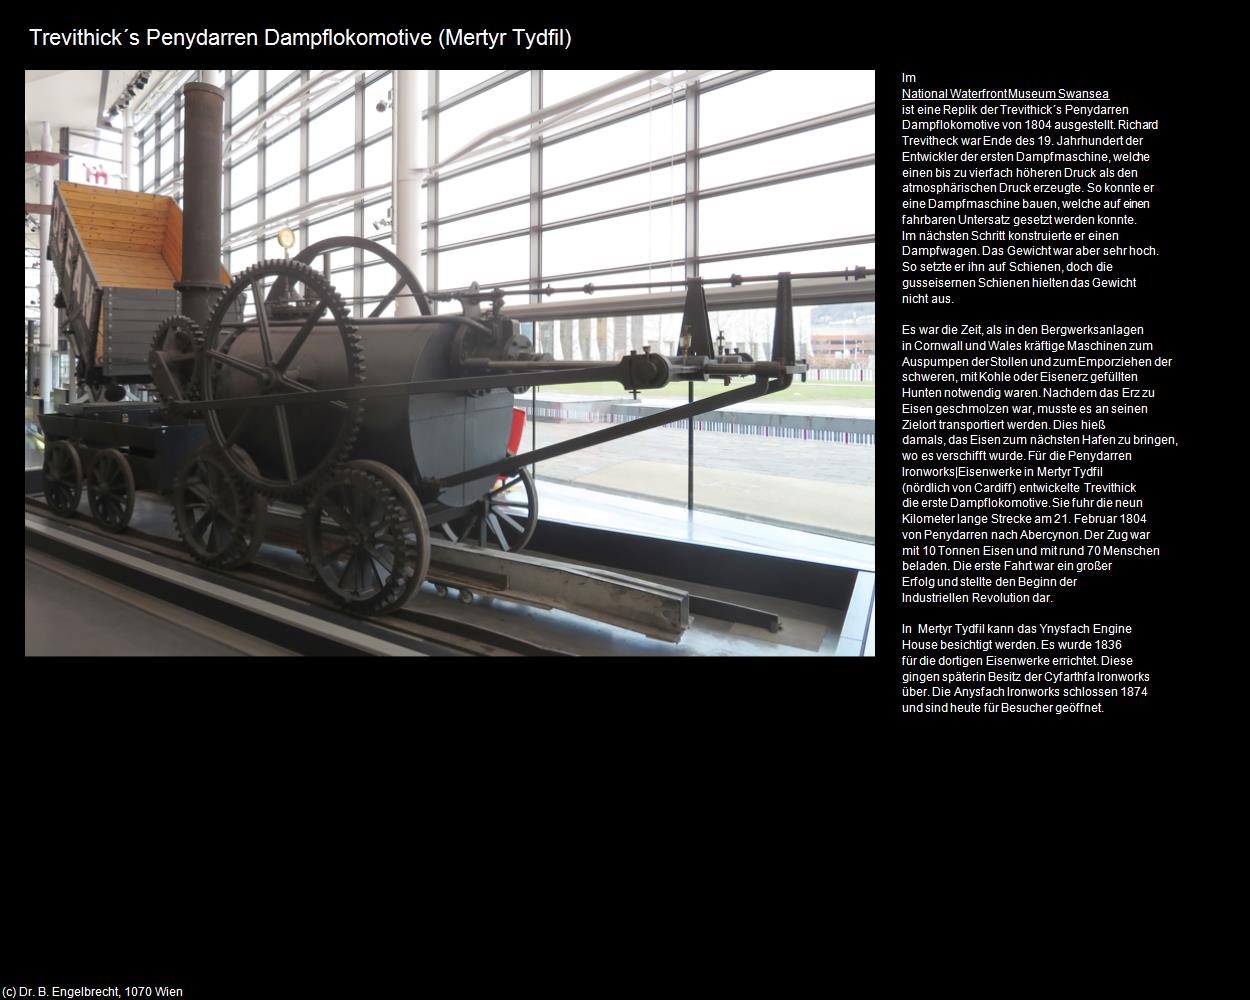 Trevithick‘s Penydarren Dampflokomotive (Mertyr Tydfil, Wales) in Kulturatlas-ENGLAND und WALES(c)B.Engelbrecht